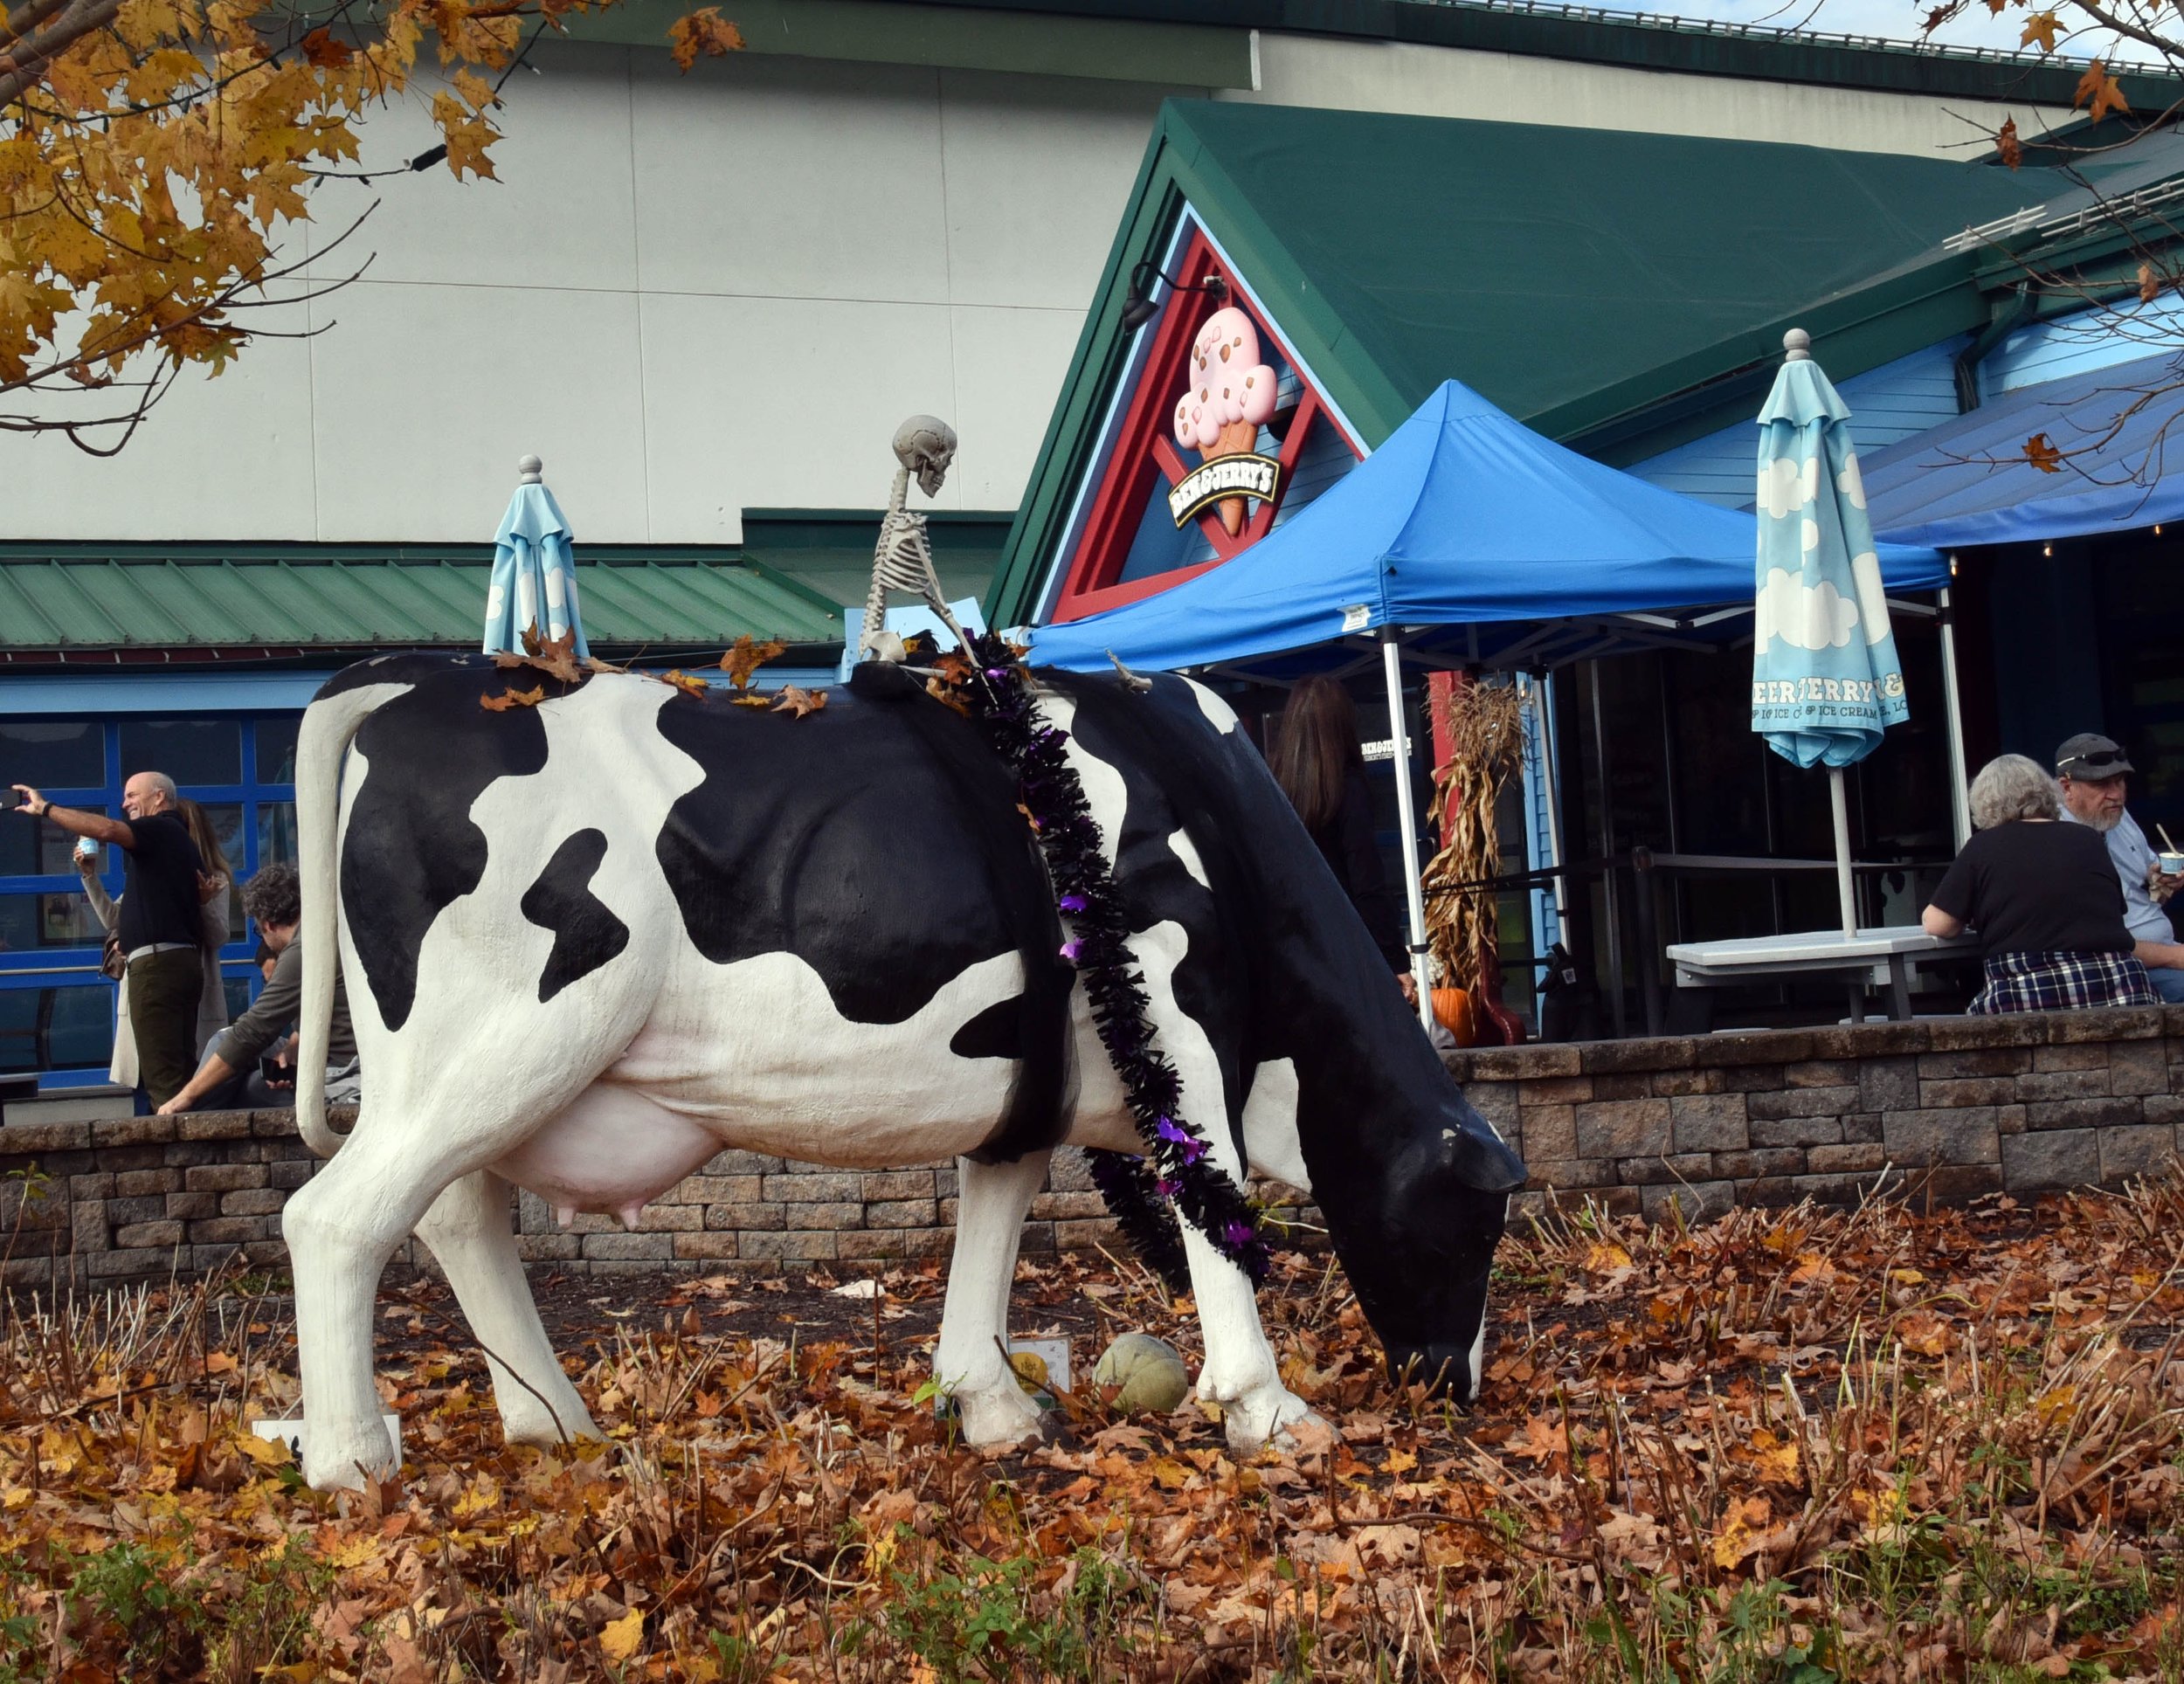  Pretend cow at Ben &amp; Jerry’s. Photo by Gordon Miller 